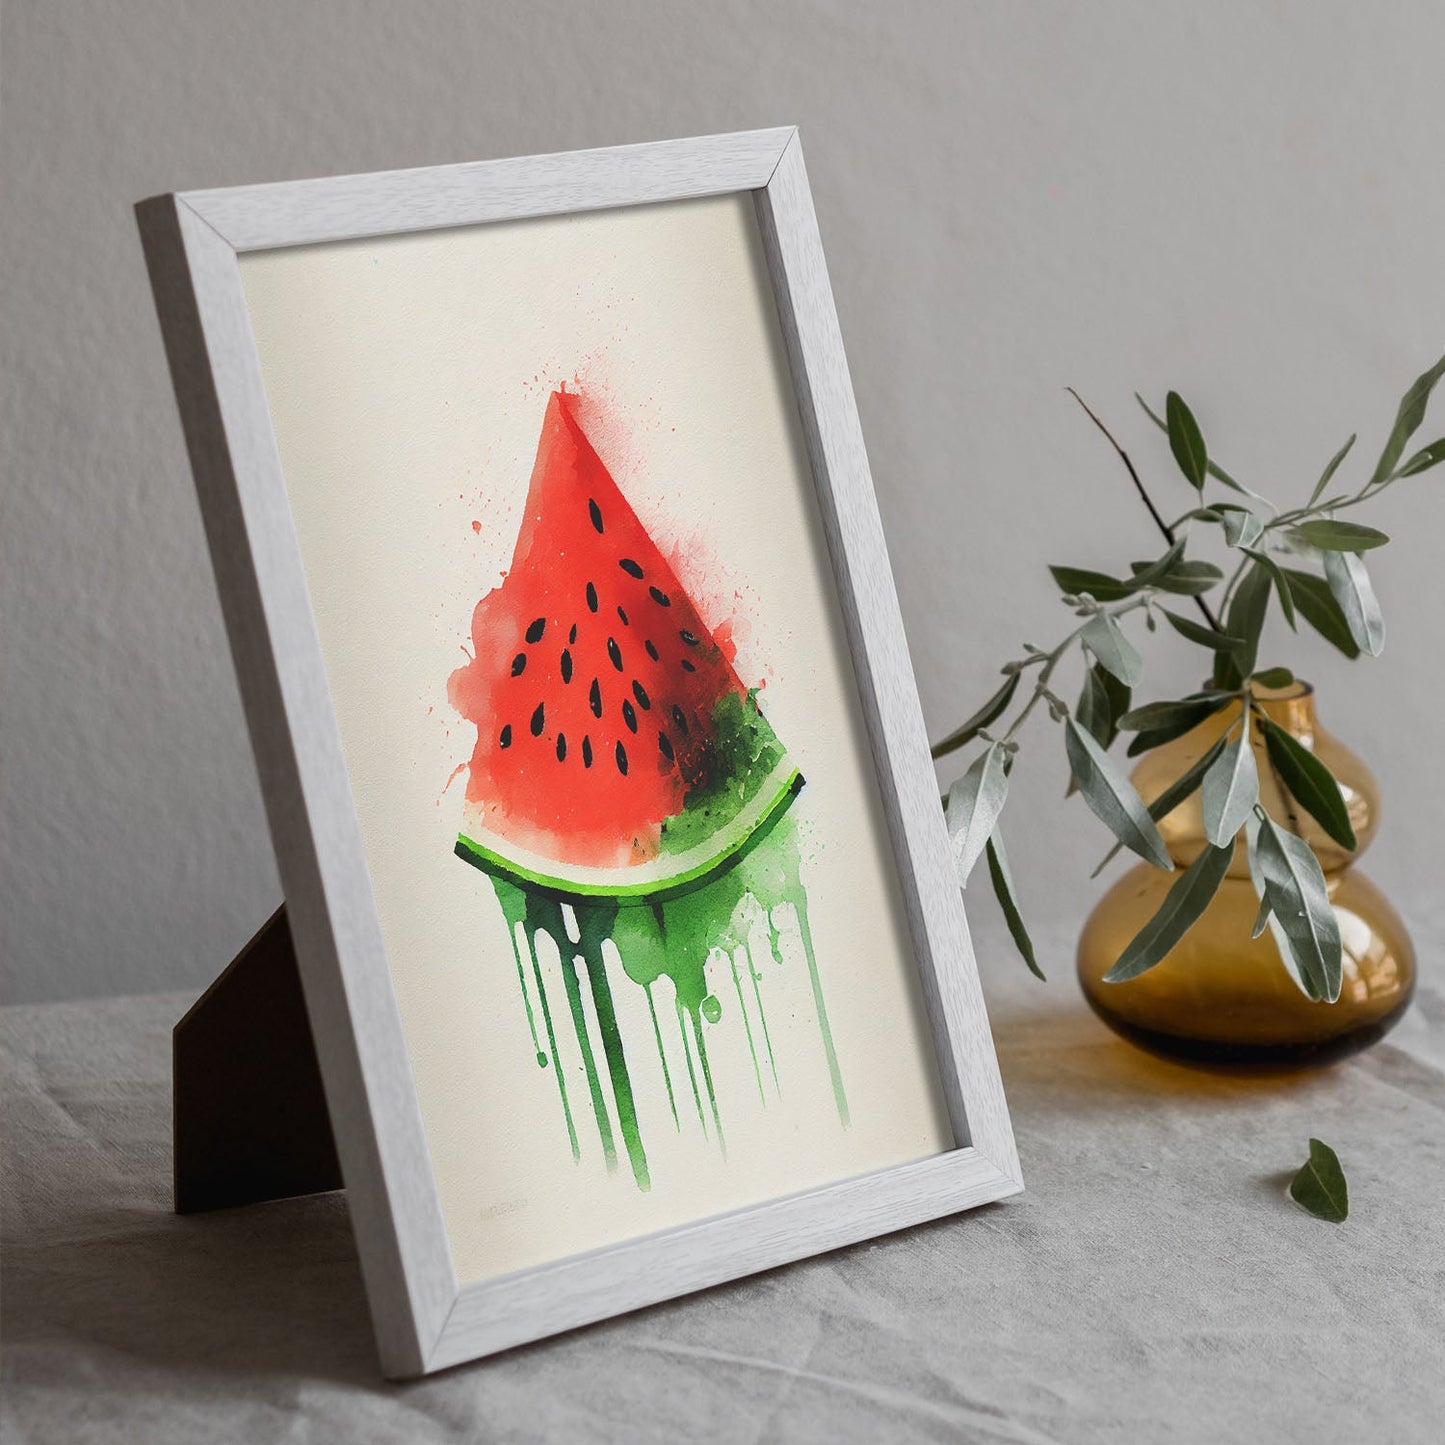 Nacnic minimalist Watermelon_1. Aesthetic Wall Art Prints for Bedroom or Living Room Design.-Artwork-Nacnic-A4-Sin Marco-Nacnic Estudio SL